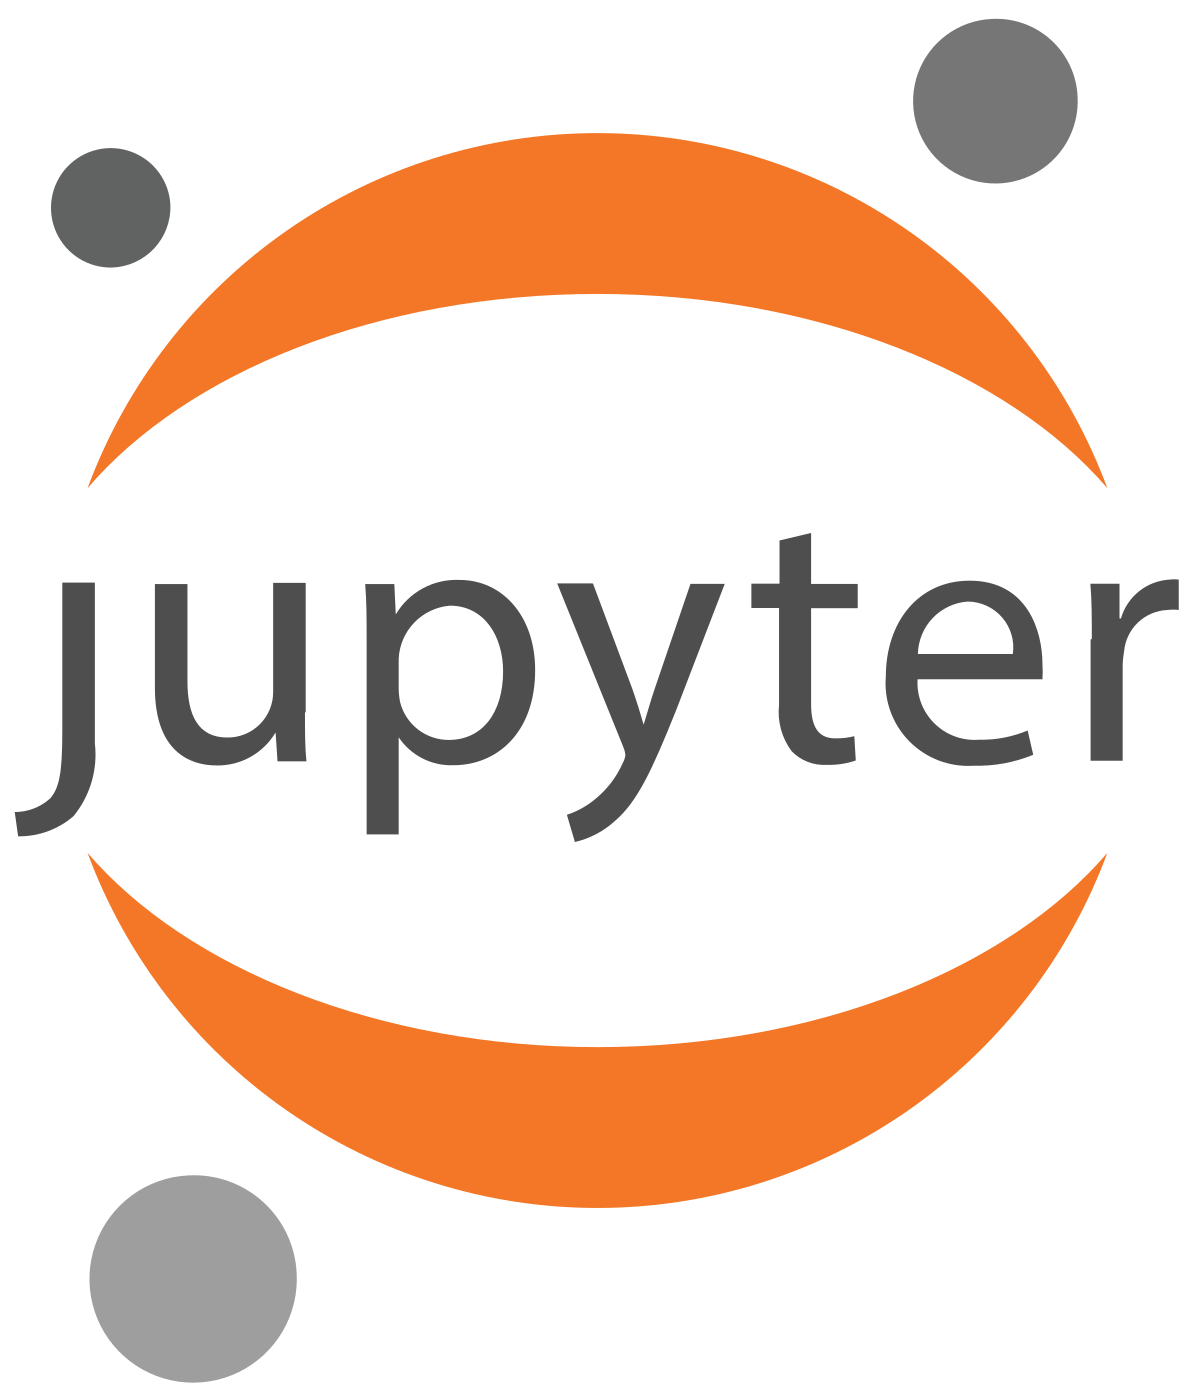 JupyterIcon